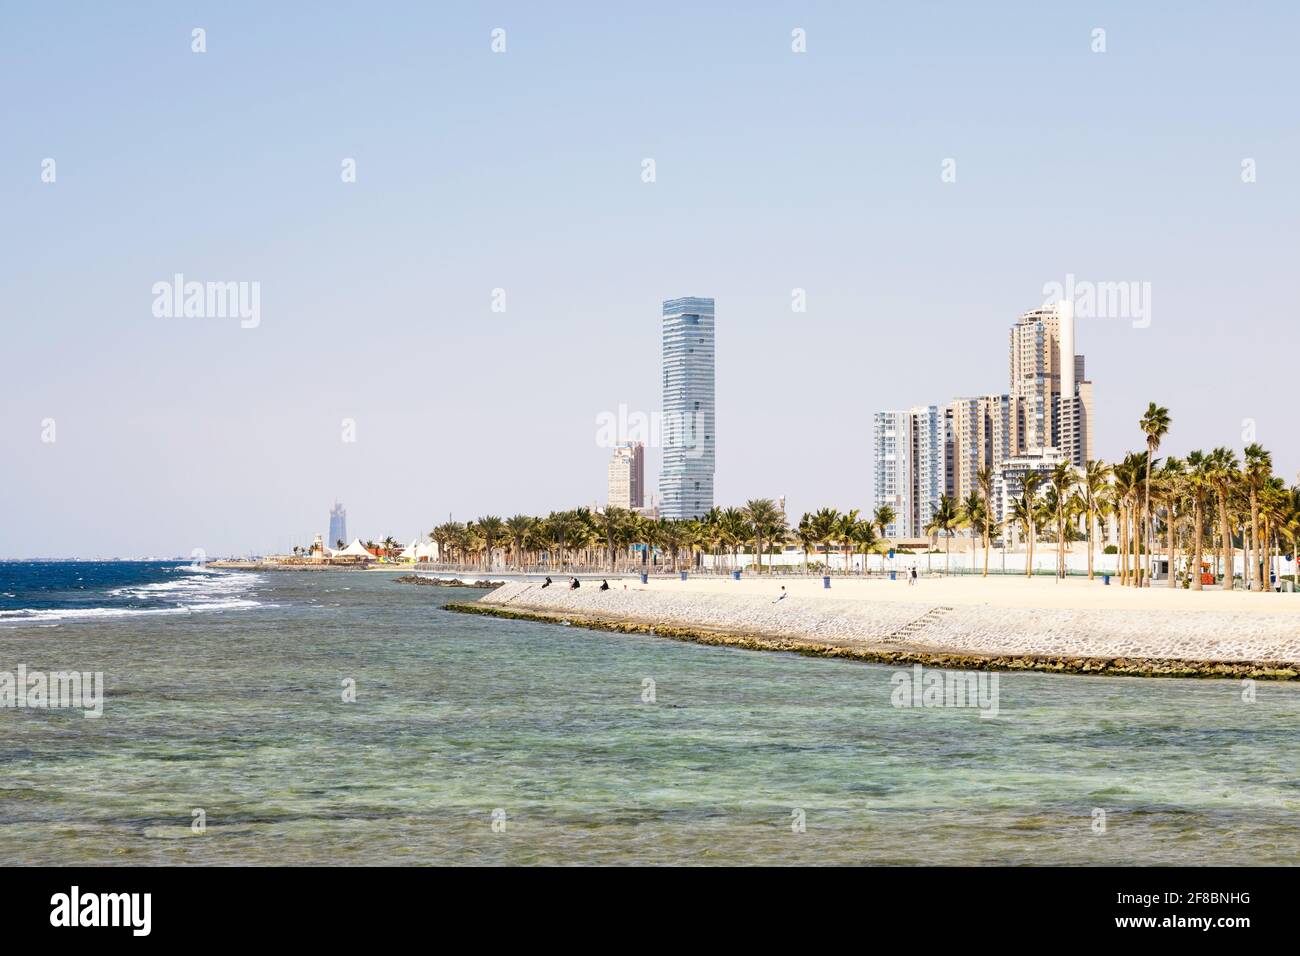 Skyline on the Corniche, promenade on the shores of the Red Sea in downtown Jeddah, Saudi Arabia Stock Photo